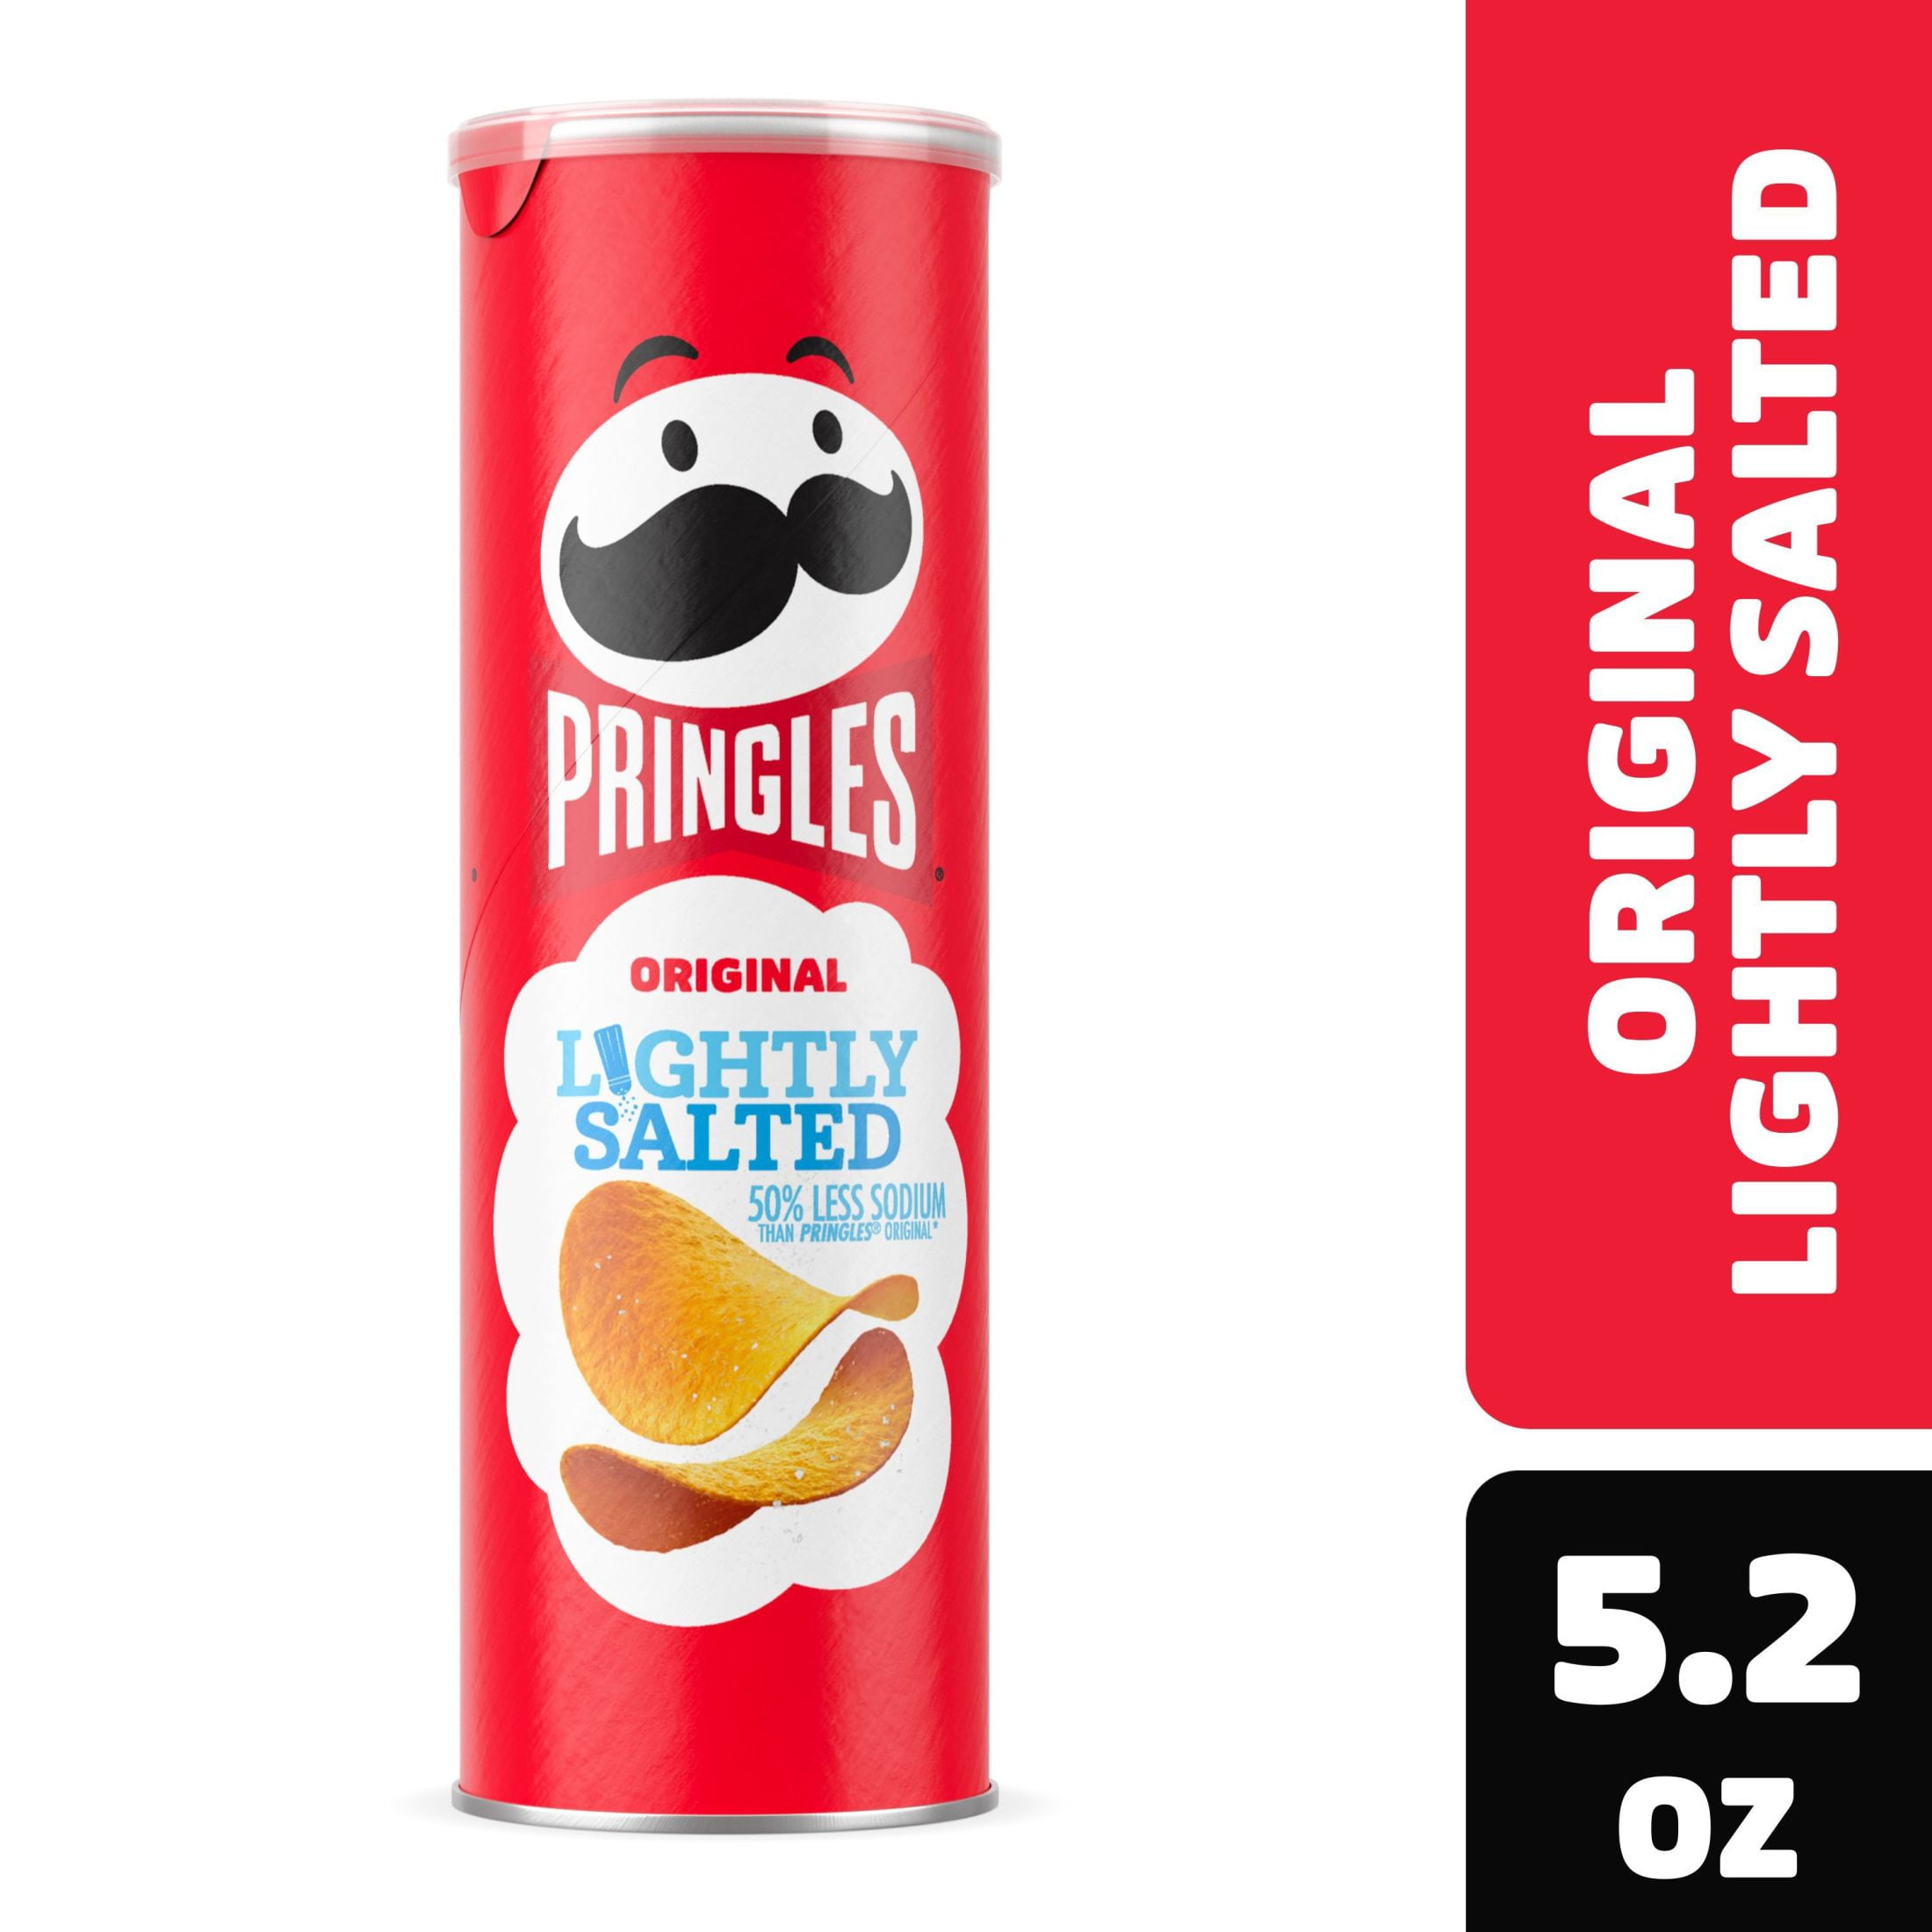 Pringles Original Potato Chips 107g - Classic Salted Crispy & Crunchy Snack  F/S